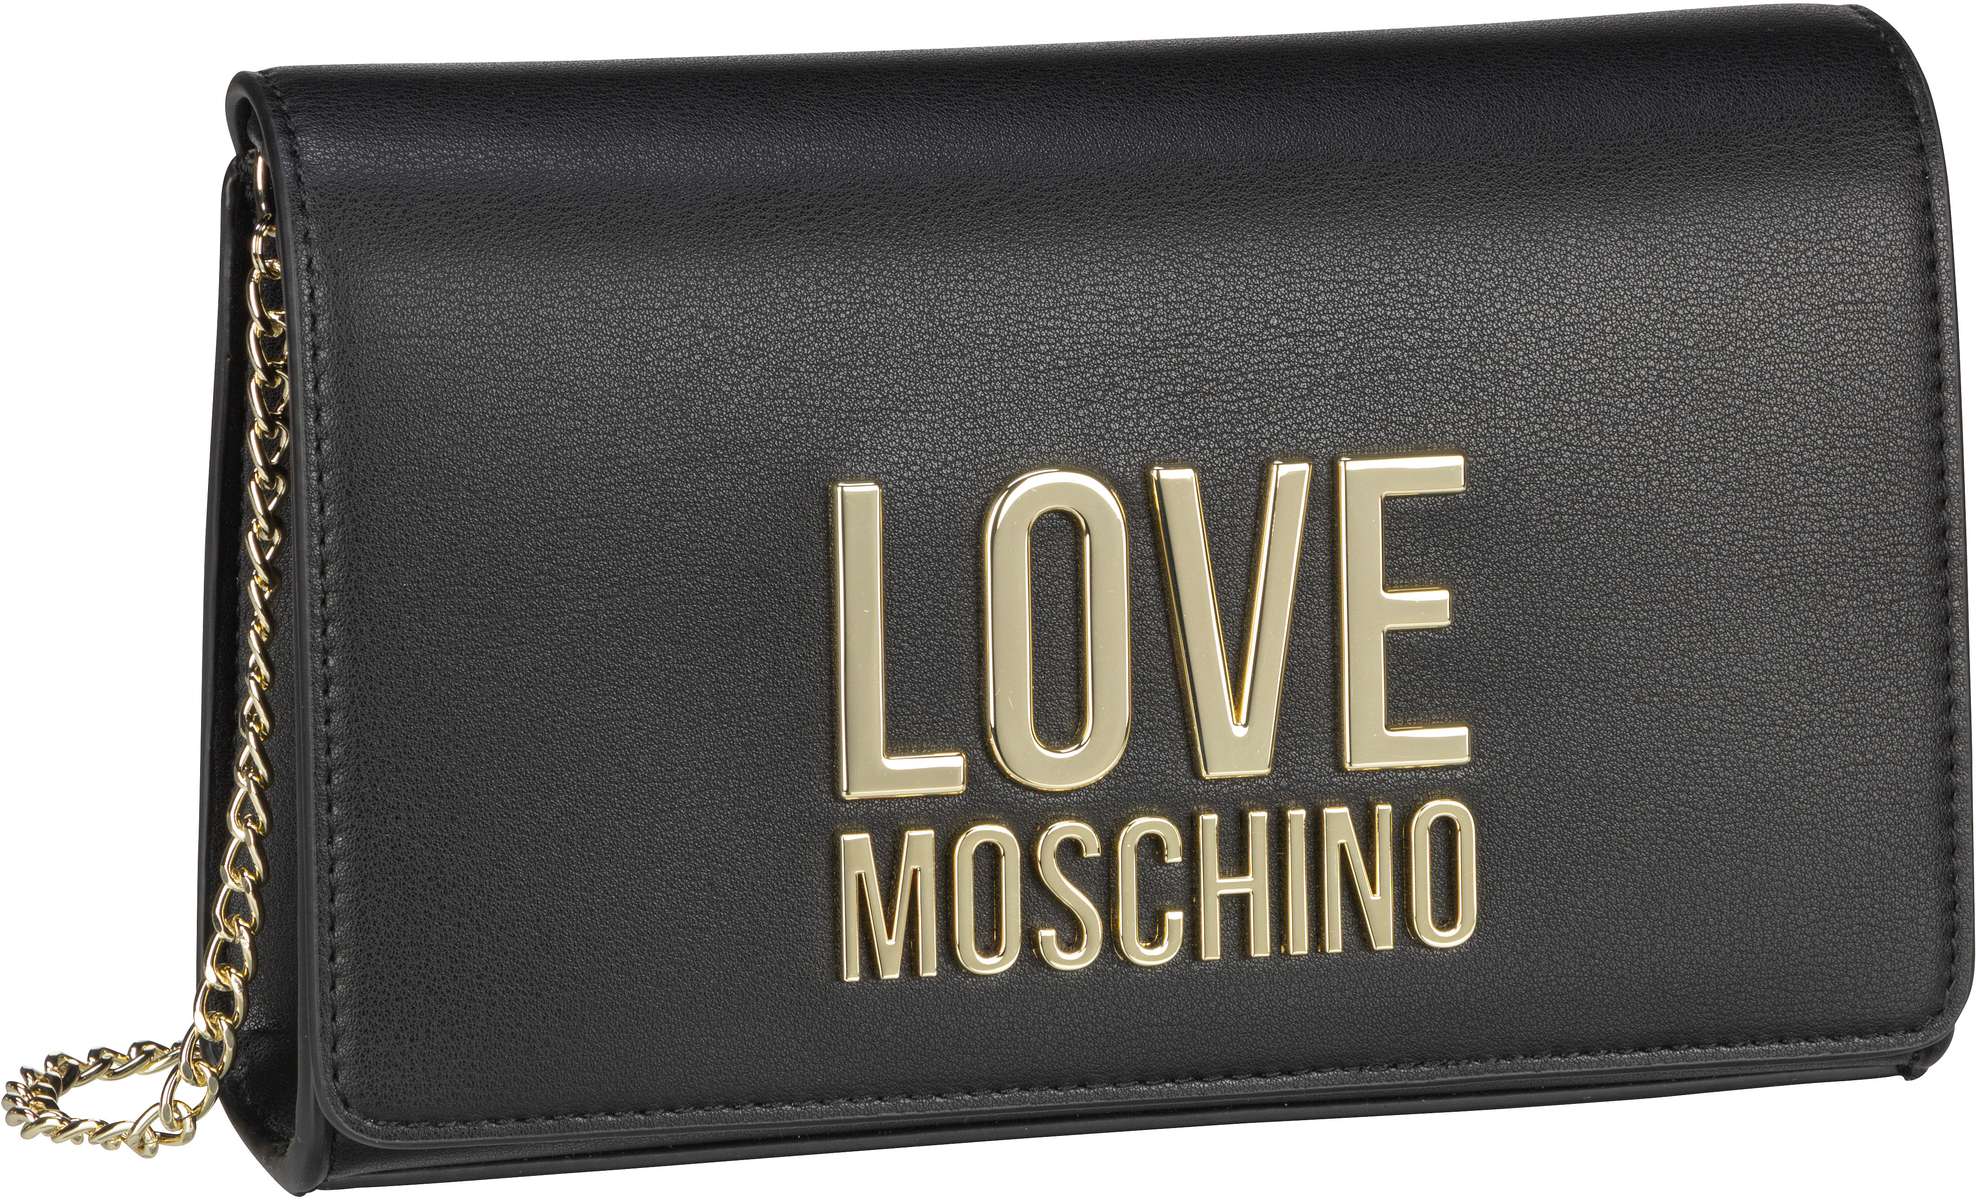 Love Moschino Lettering Bag 4127 - Black